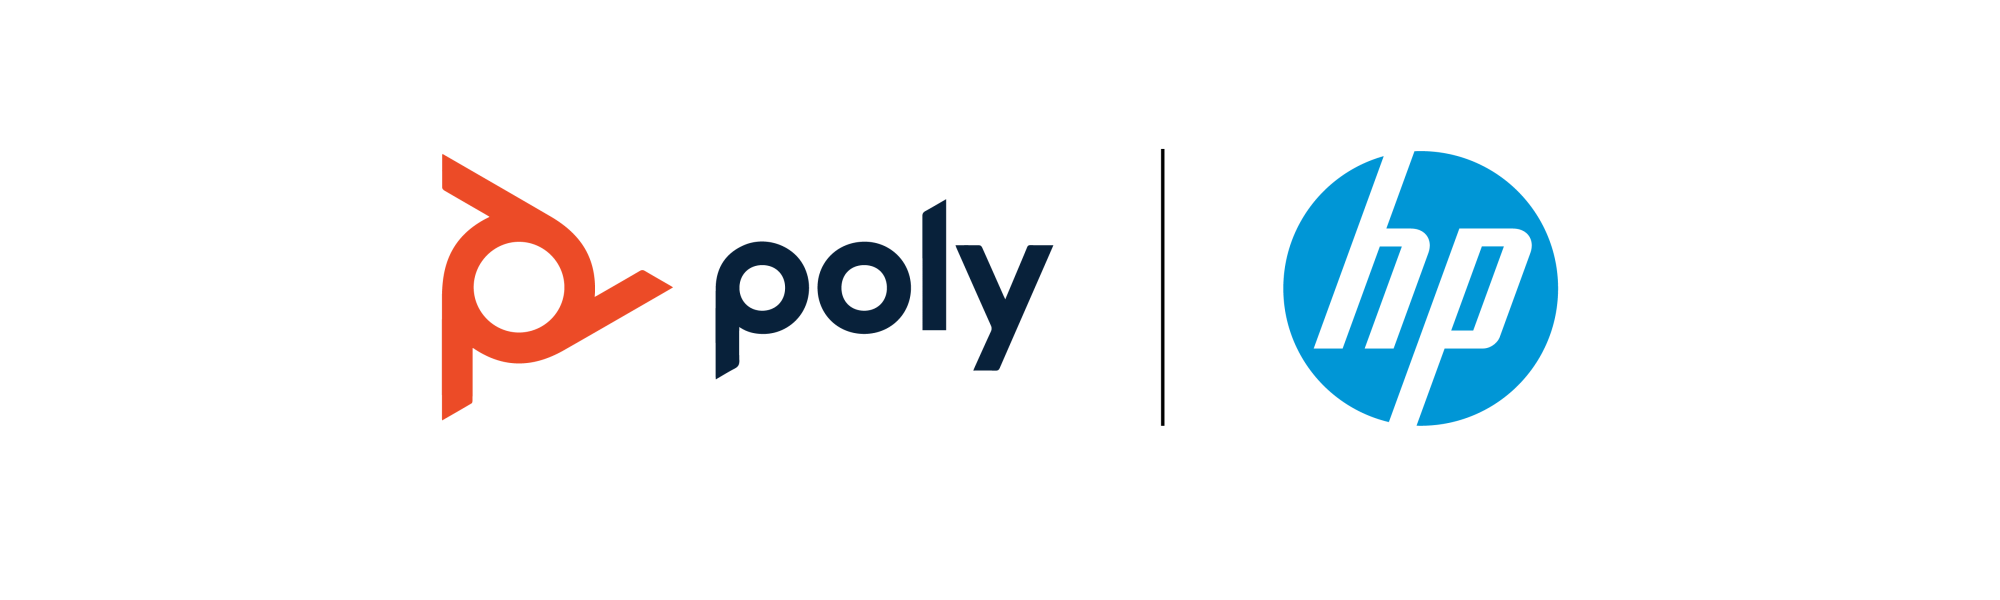 logo poly hp